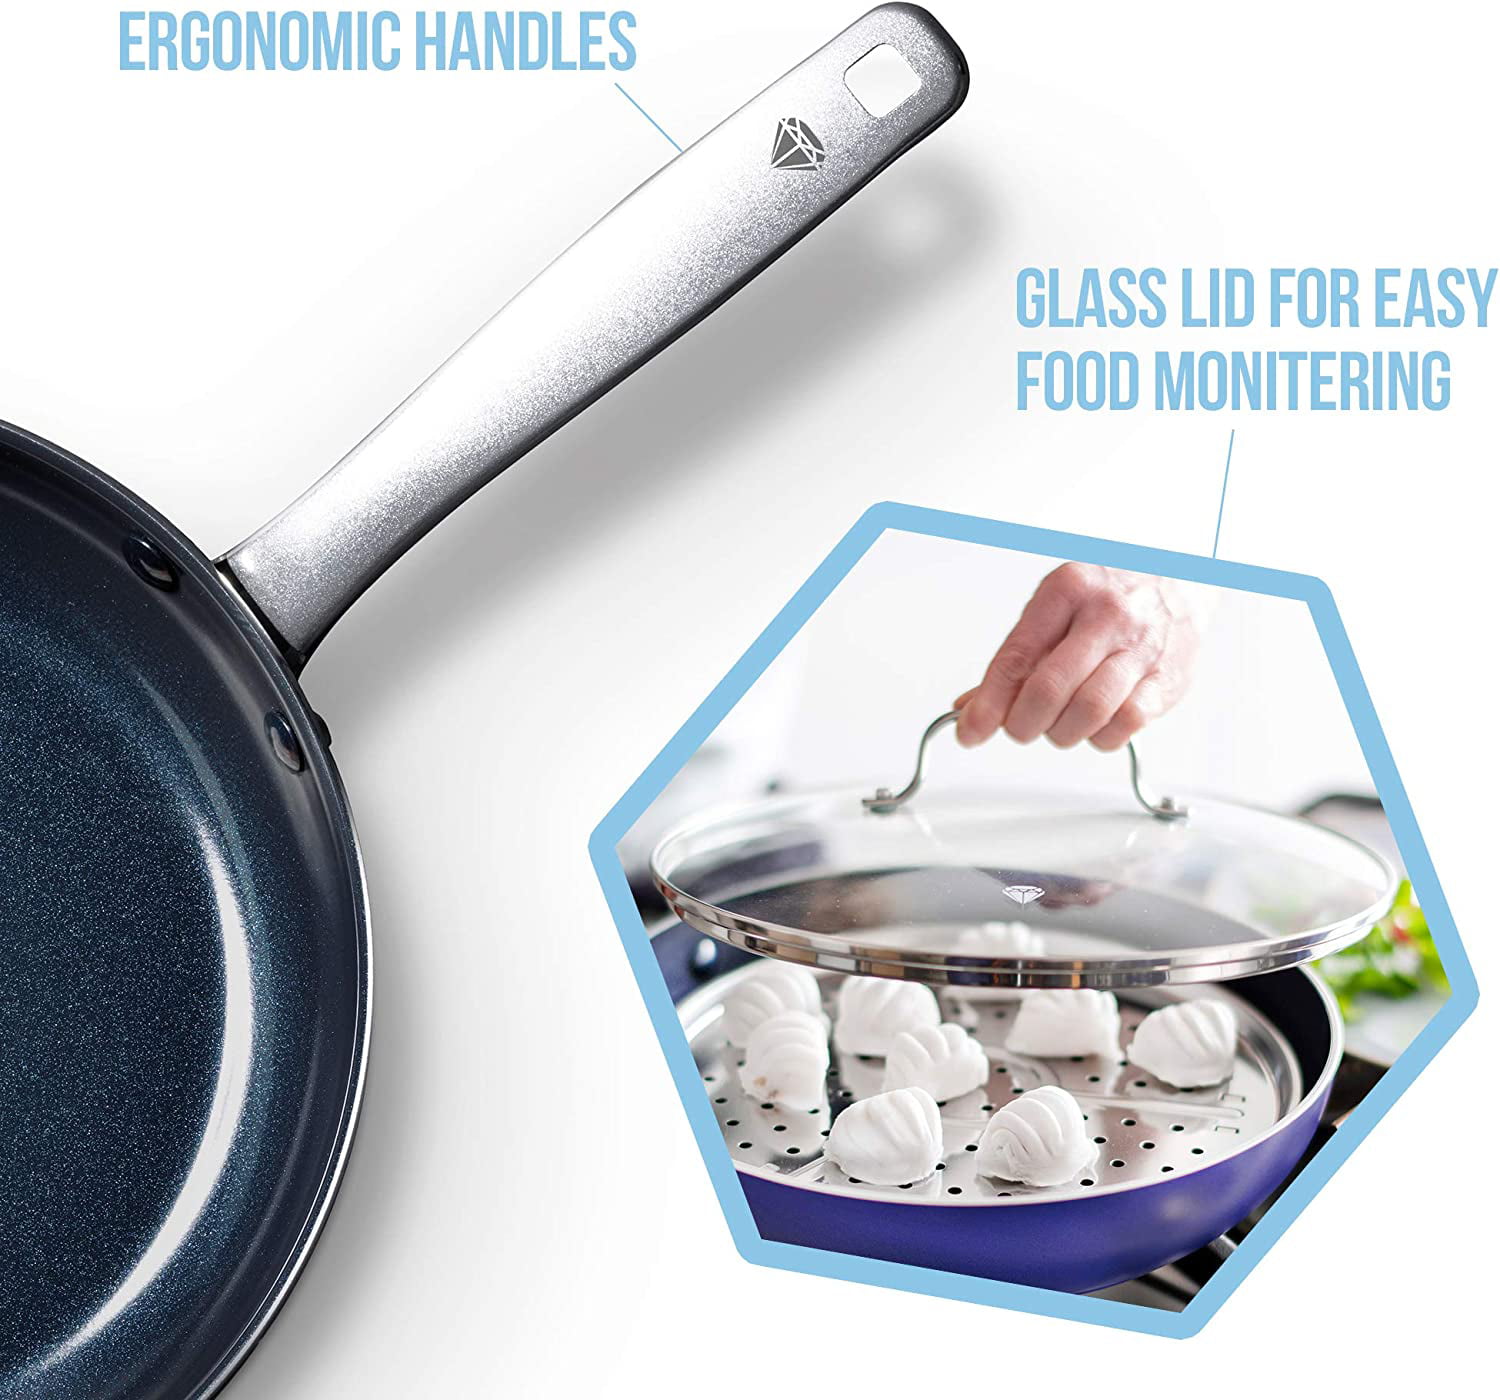 Blue Diamond Toxin-Free Ceramic and Dishwasher Safe 12-Piece Pots